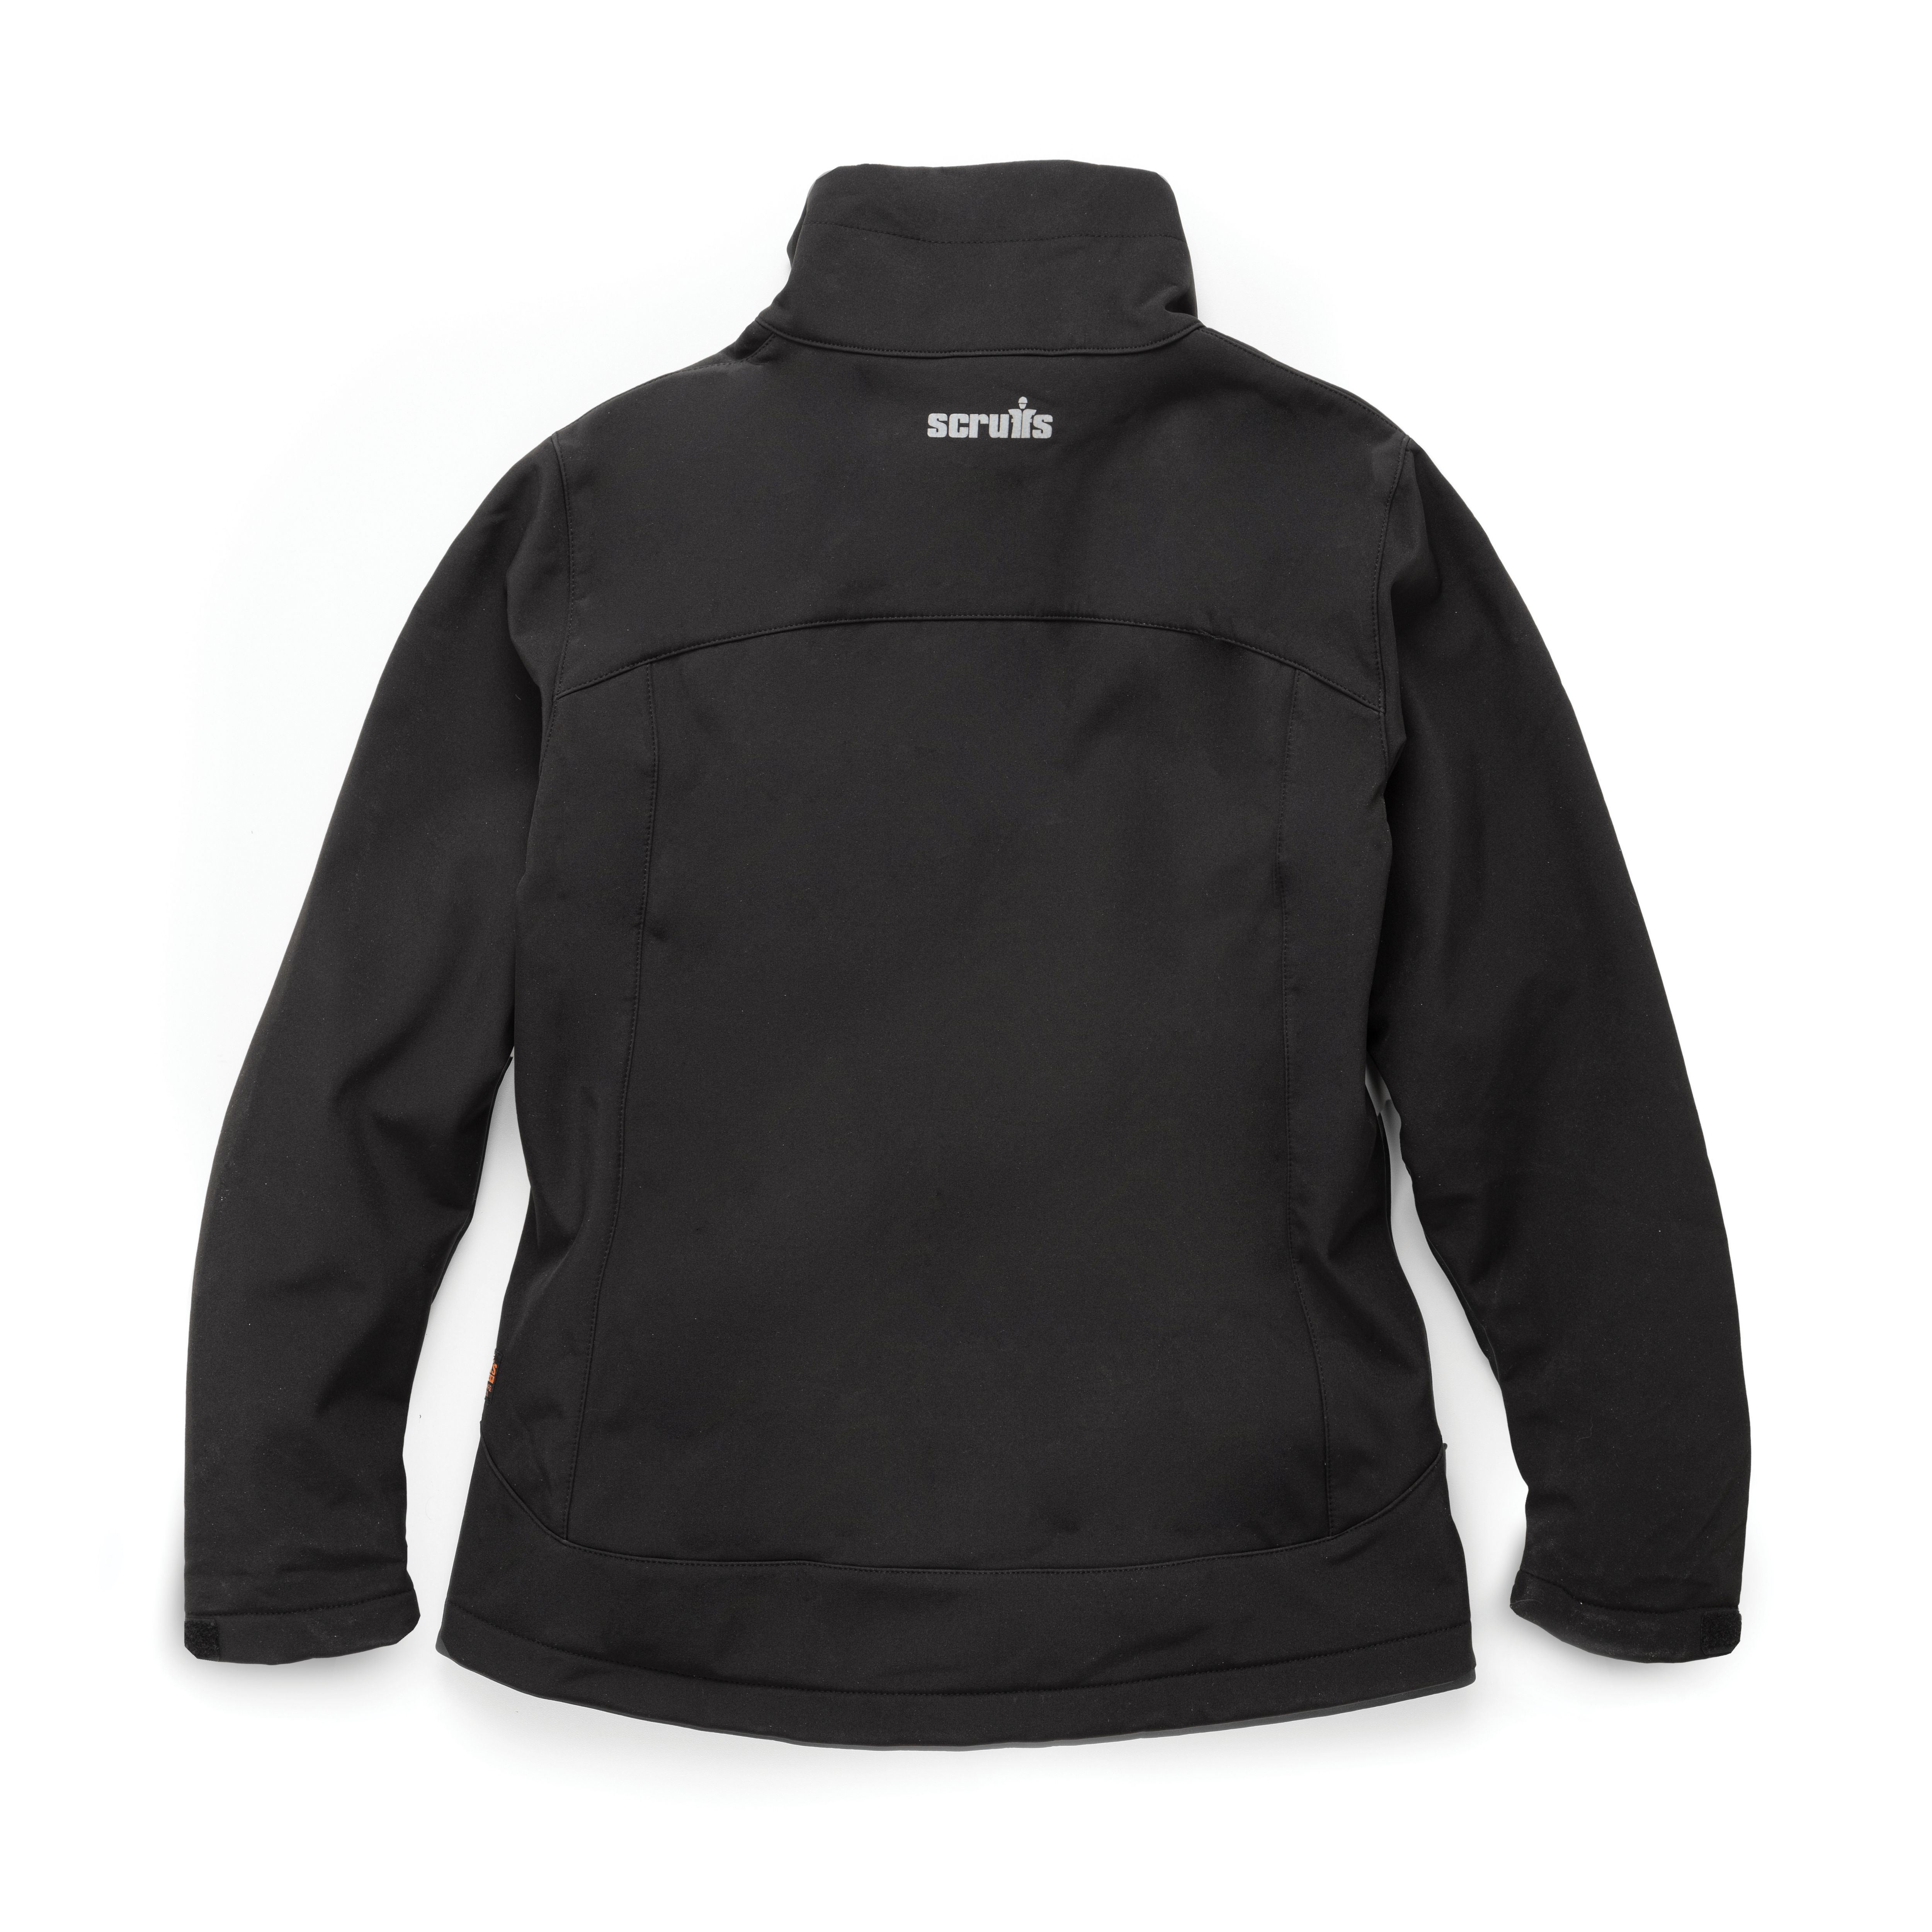 Scruffs Black Women's Softshell jacket, Size 14